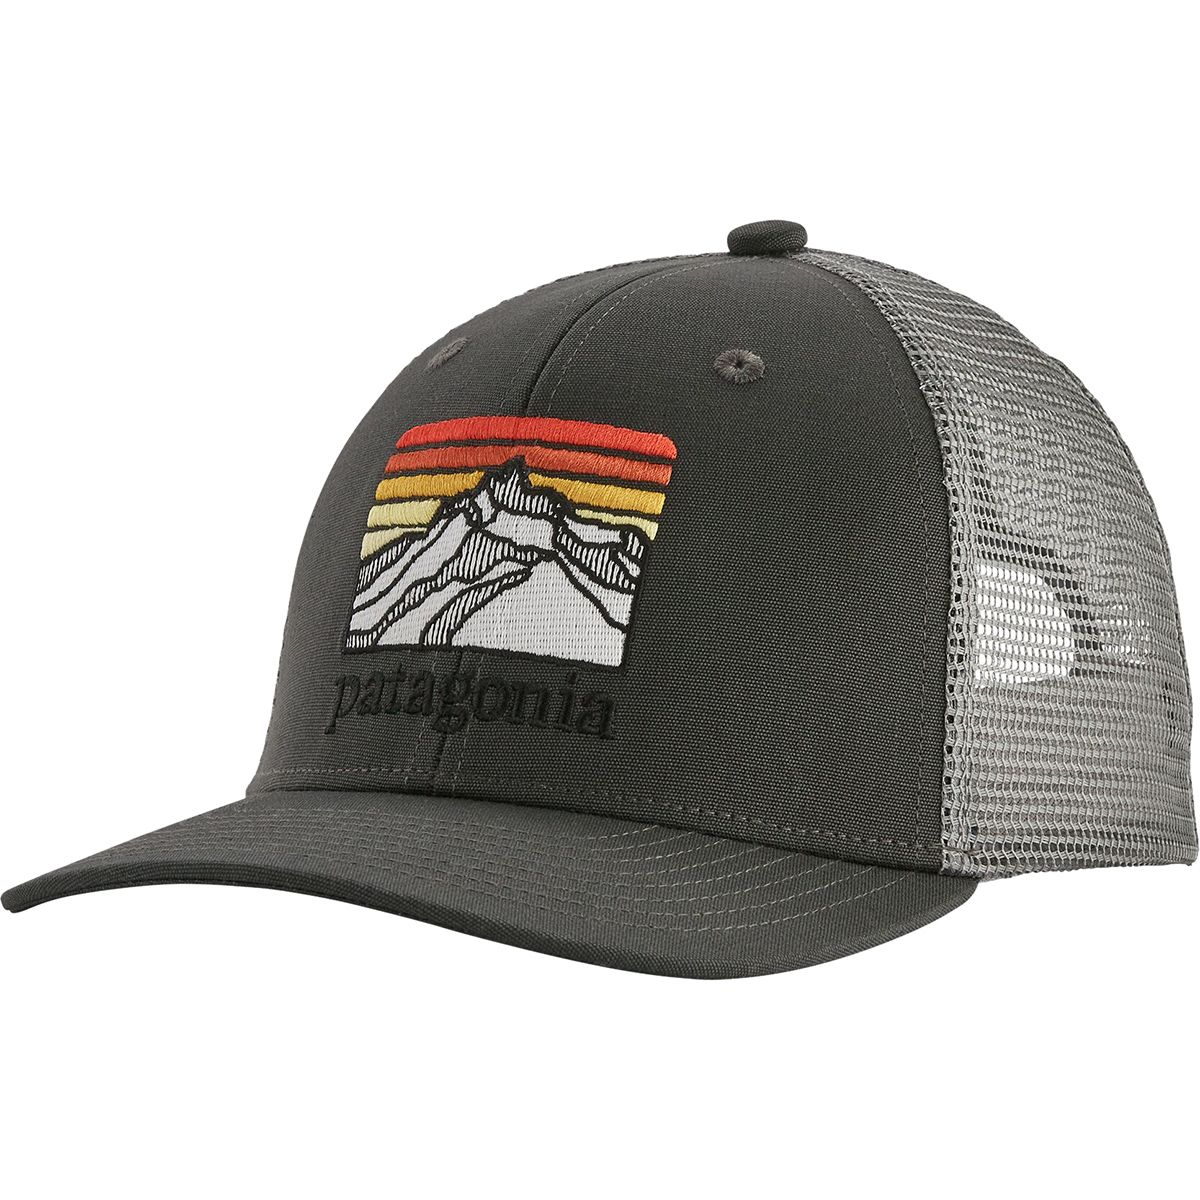 Patagonia Trucker Hat - Kids' | Backcountry.com